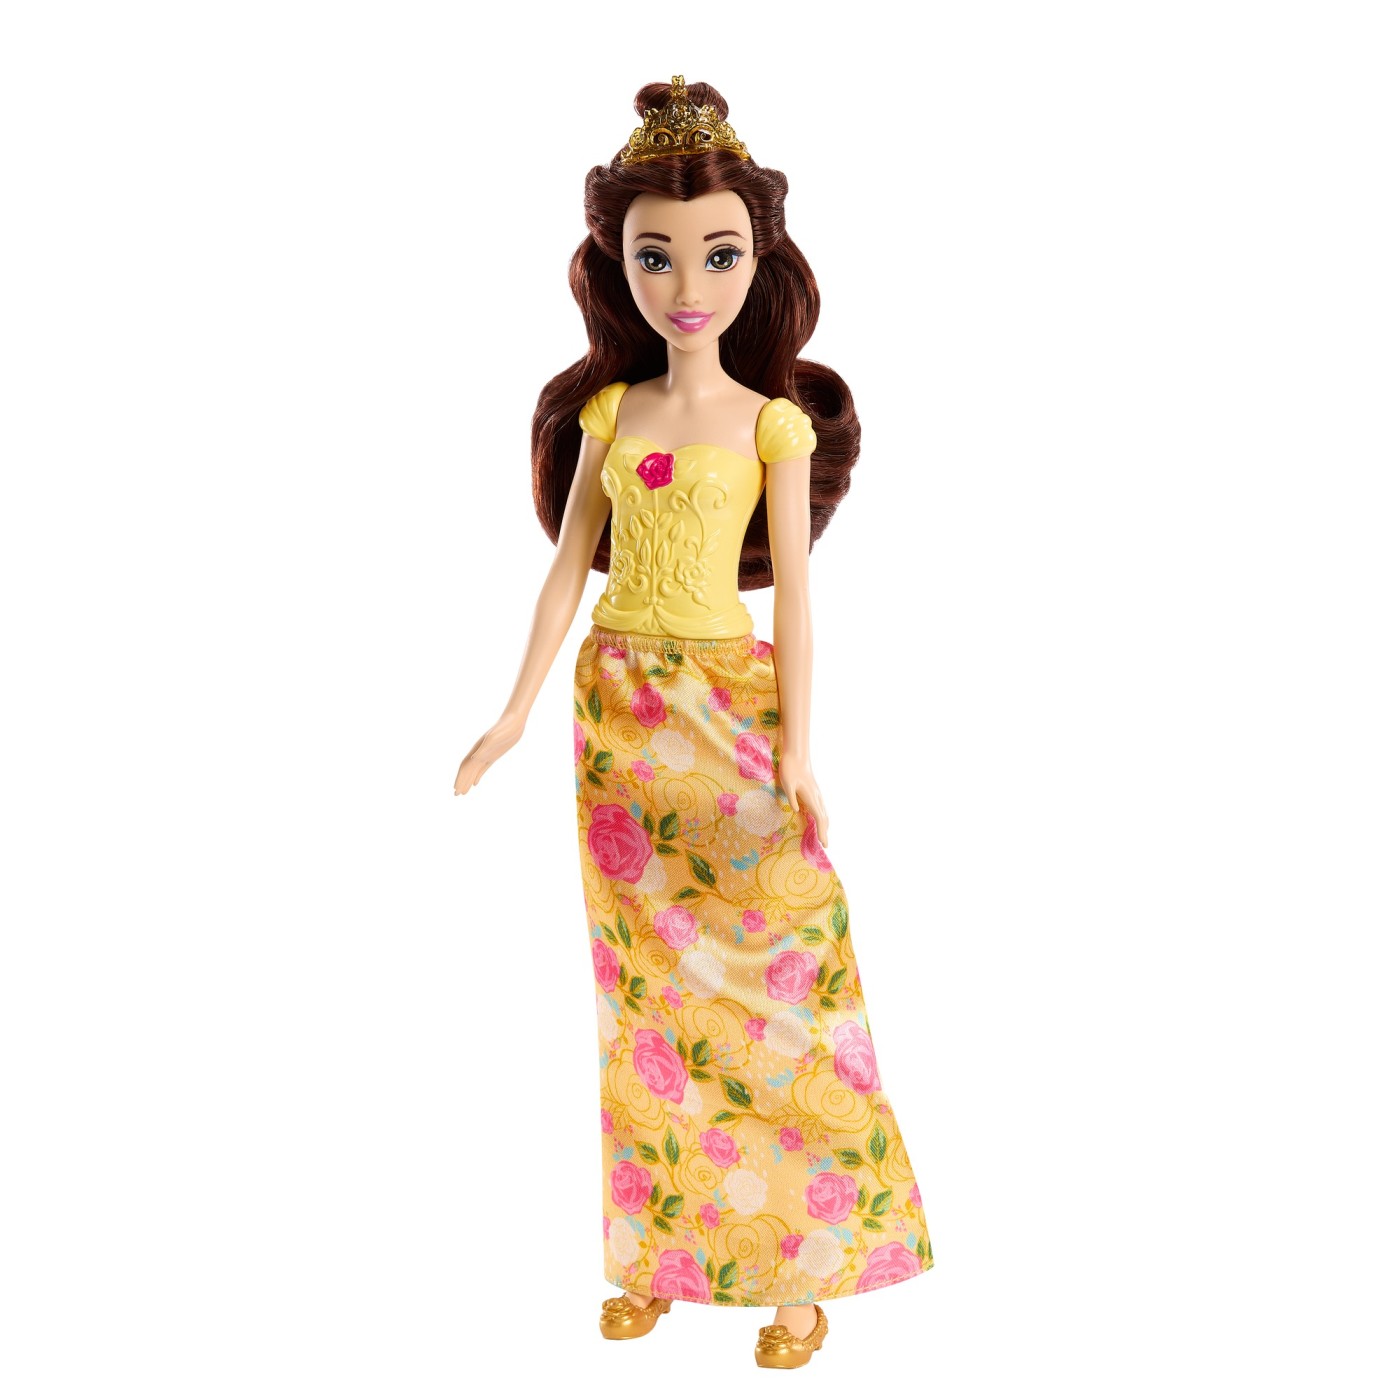 Papusa Printesa Belle - Disney Princess | Mattel